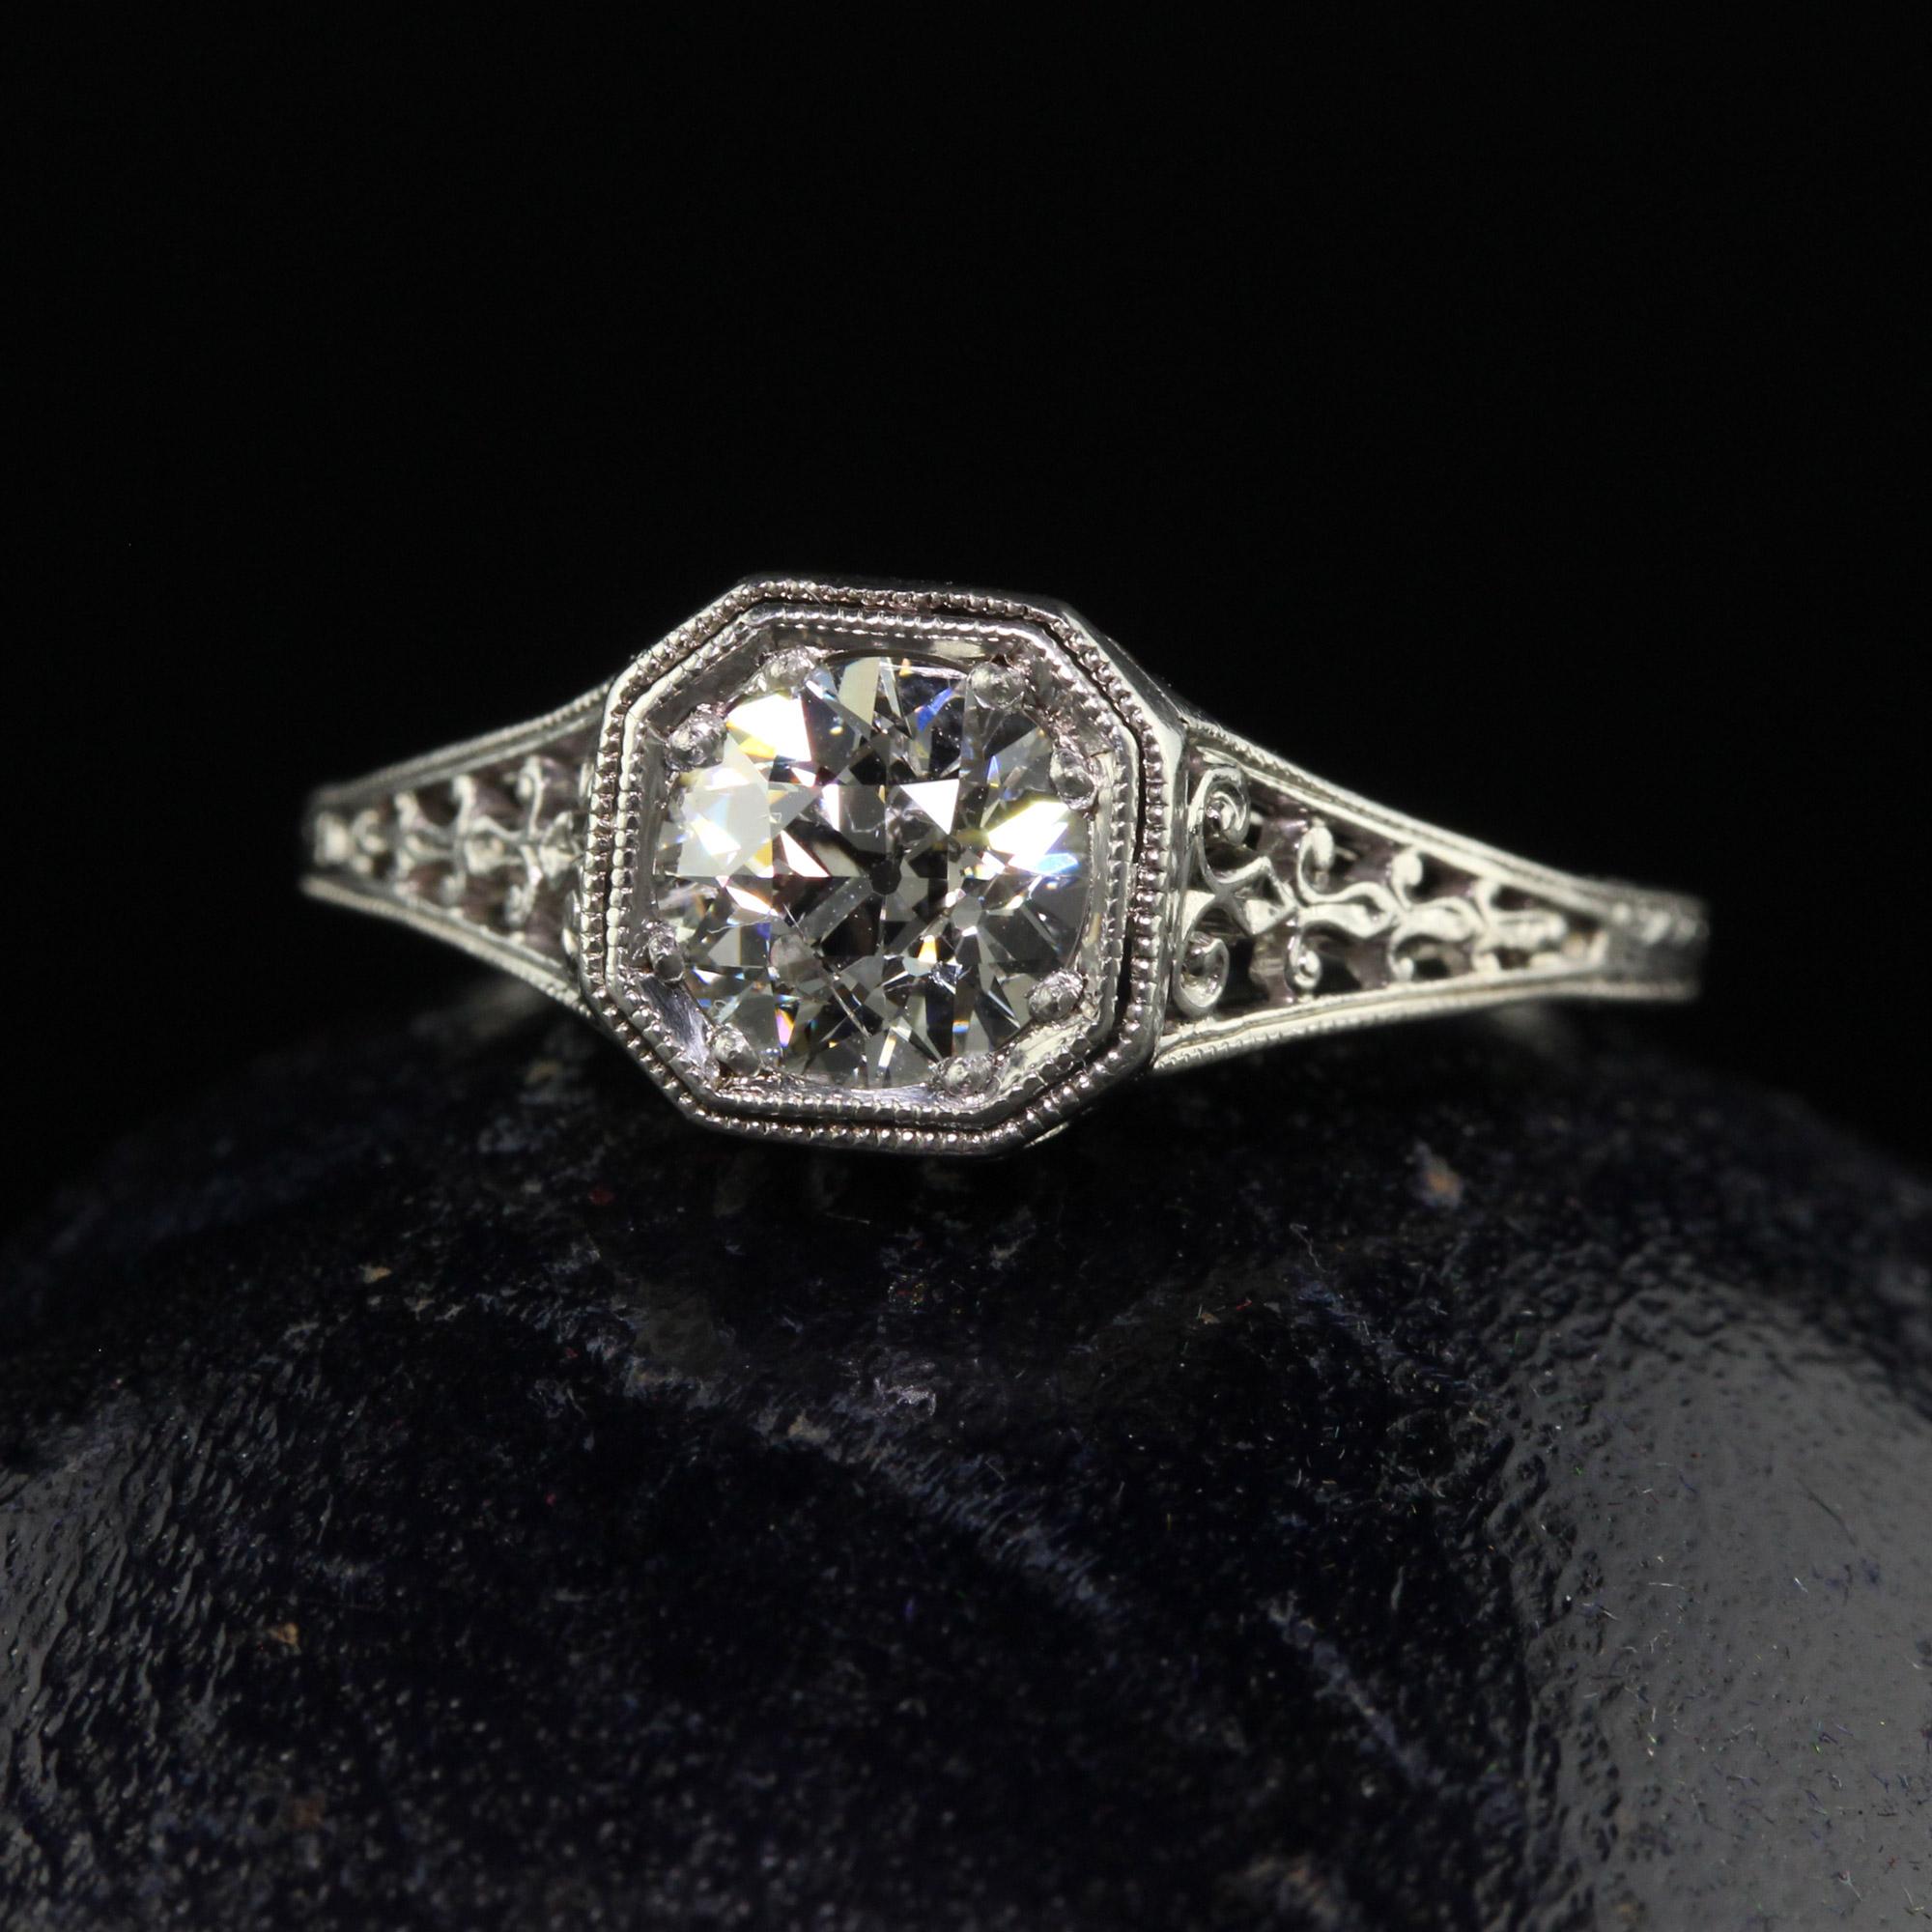 Beautiful Antique Art Deco Platinum Old Euro Diamond Filigree Engagement Ring - GIA. This gorgeous engagement ring is crafted in platinum. The center has a gorgeous old European cut diamond that has a GIA report. The diamond is set in a gorgeous art